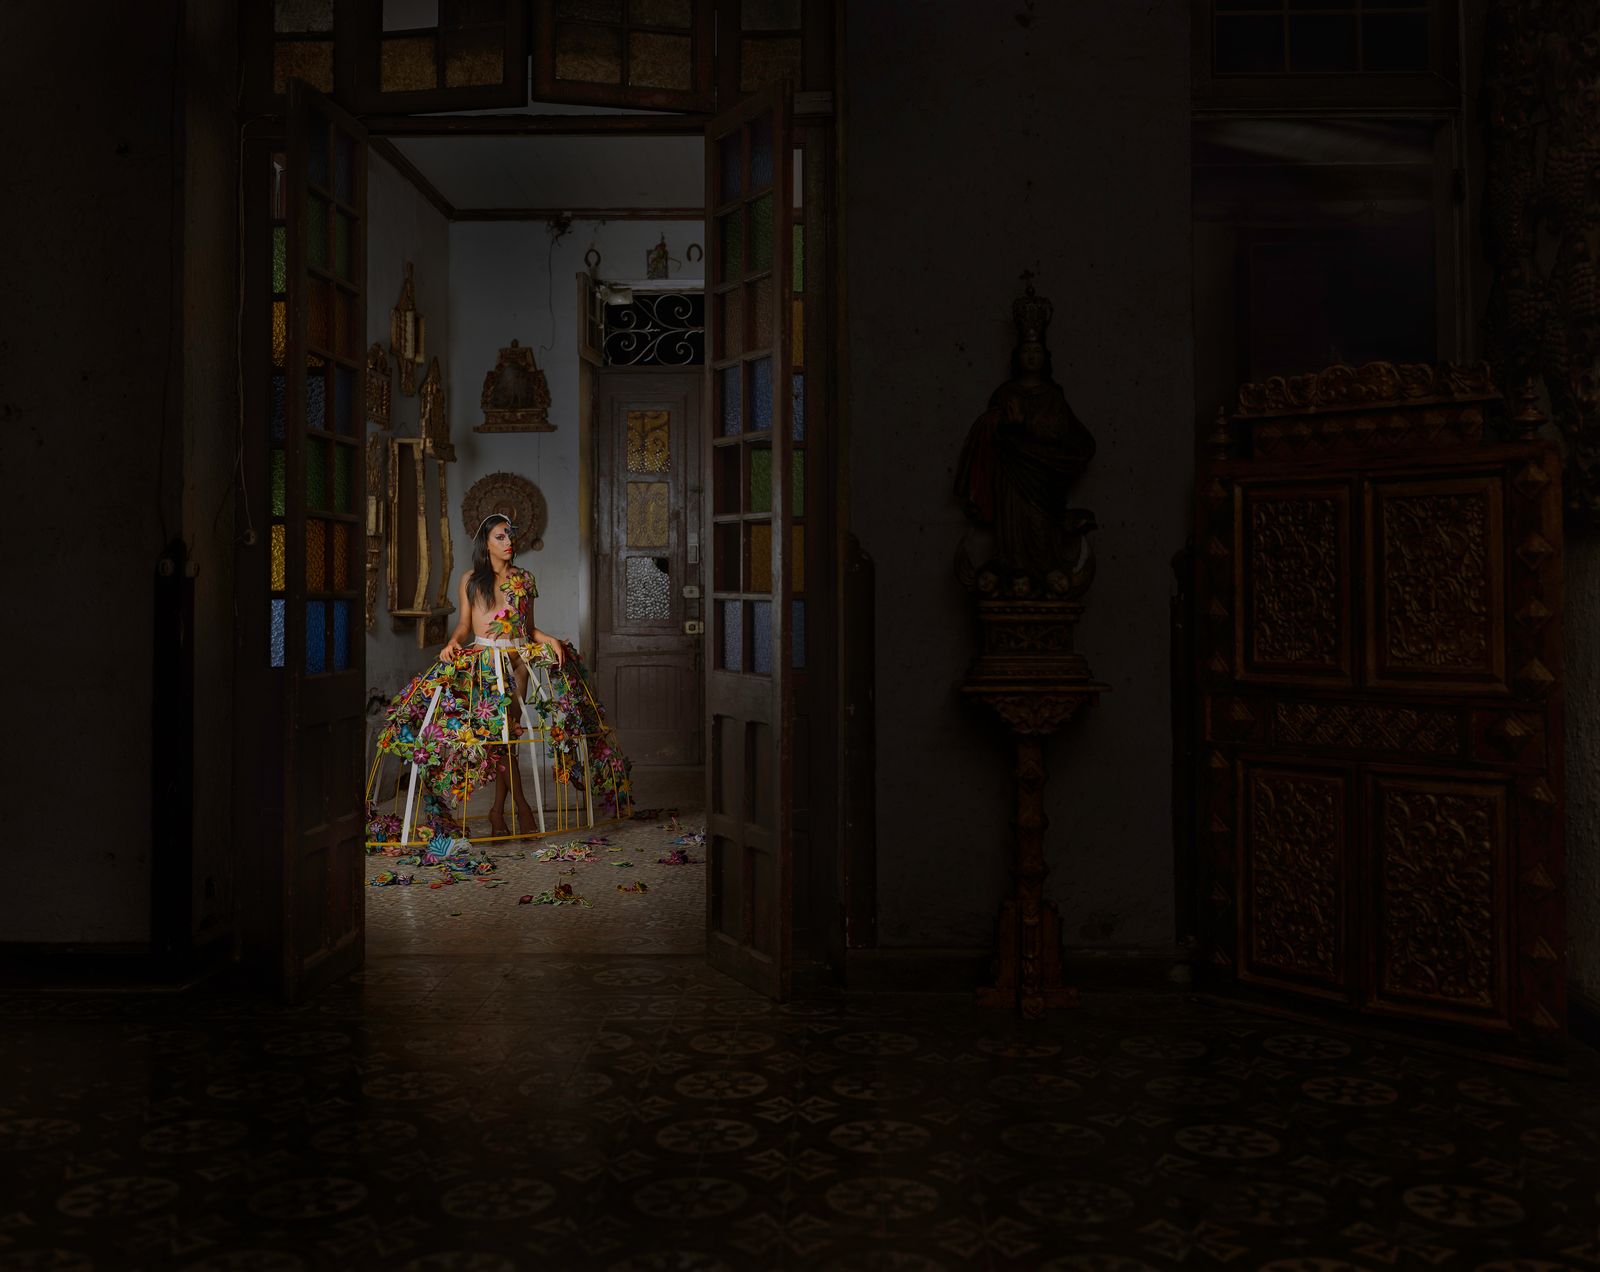 © Juan Jose Barboza-Gubo and Andrew Mroczek - Image from the Virgenes de la puerta photography project